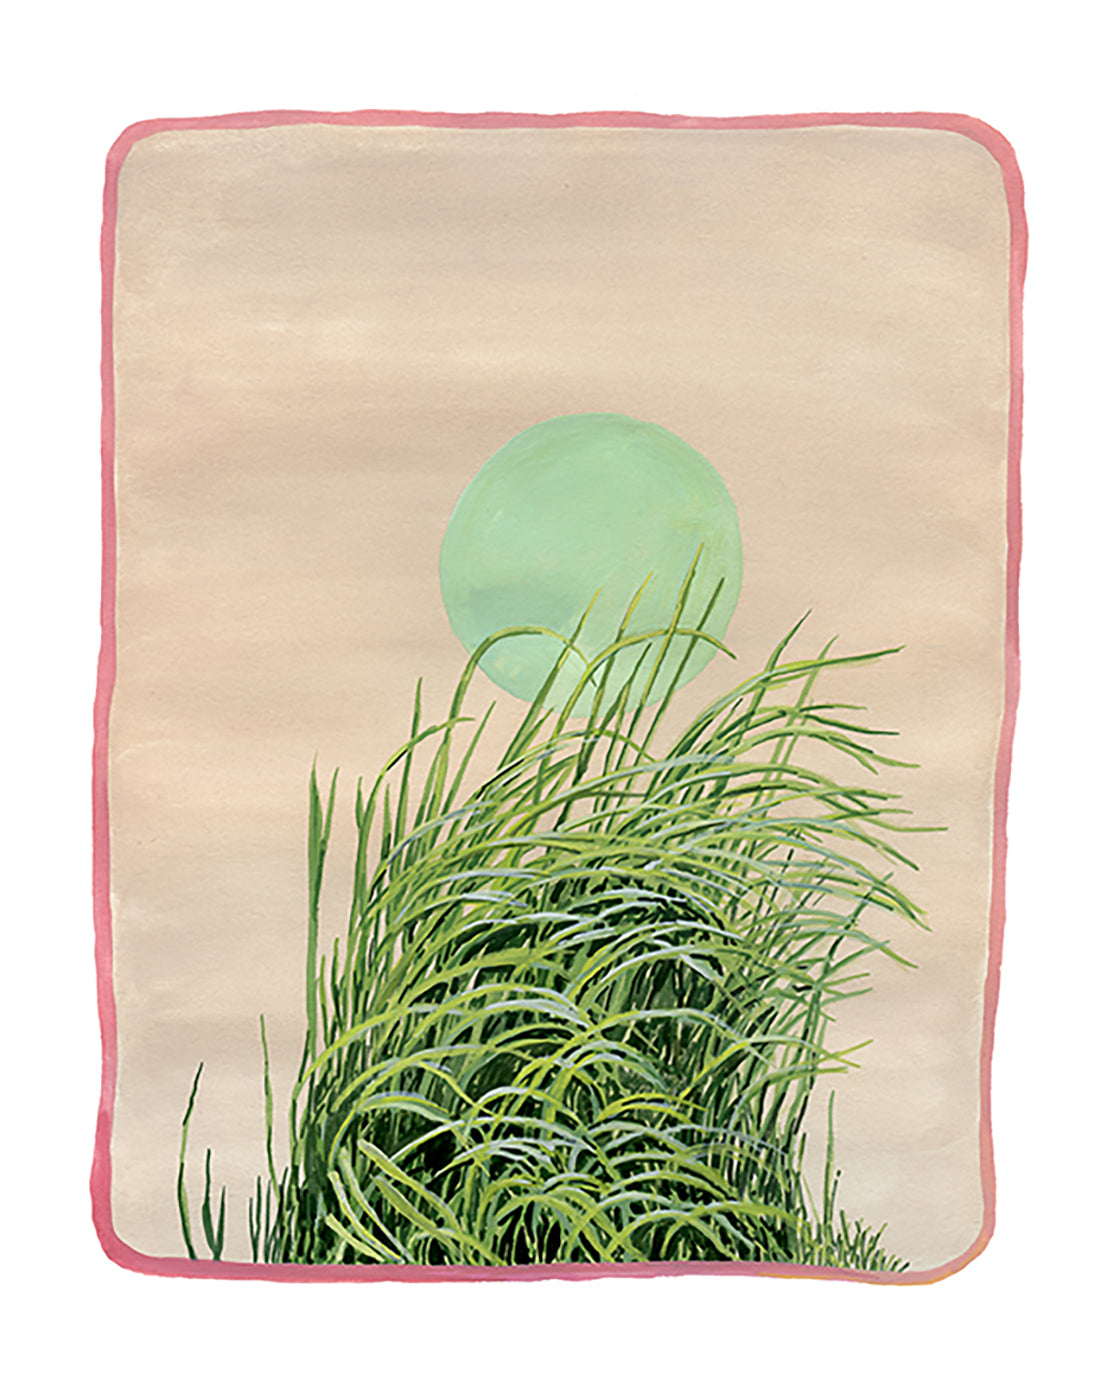 Sea Grass - Hallie Rose Taylor - 8x10"